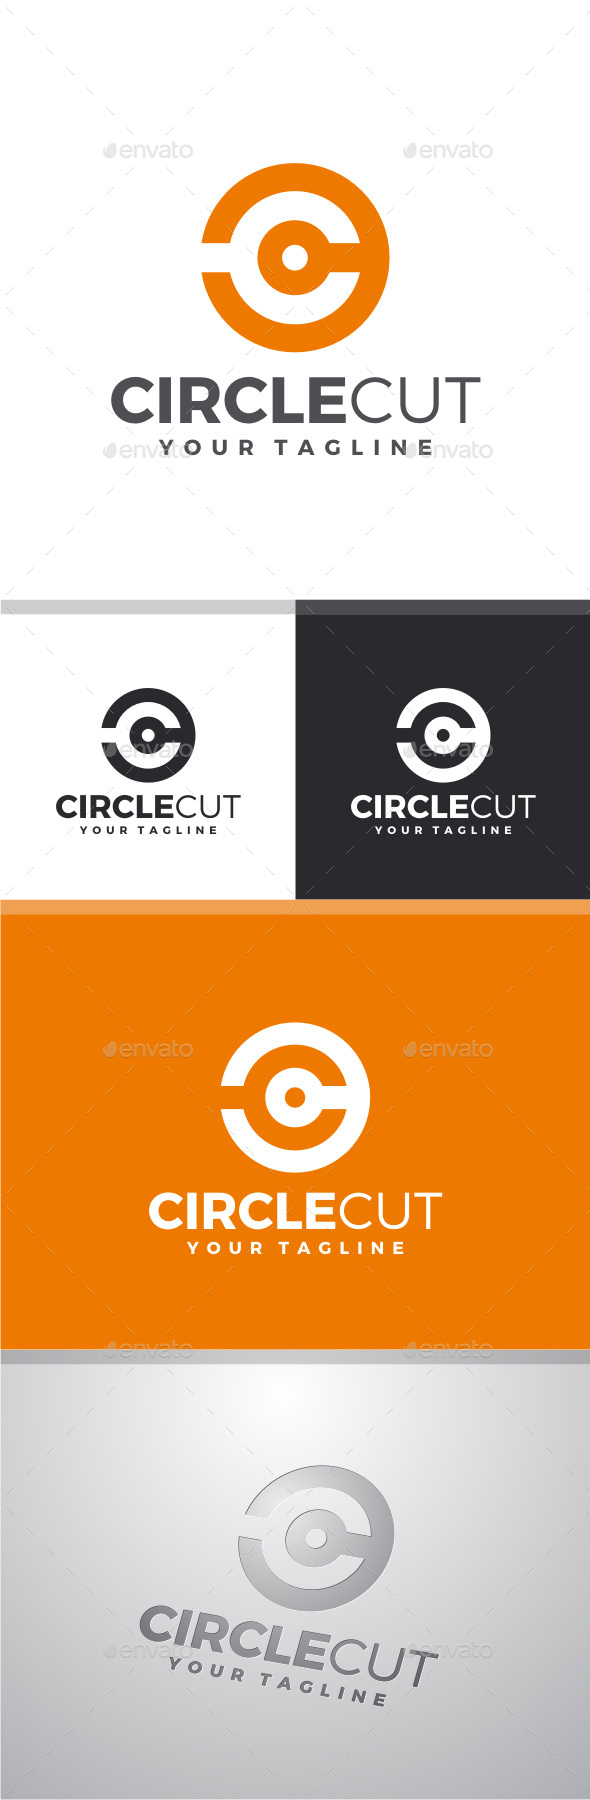 Circle Cut - Letter C Logo